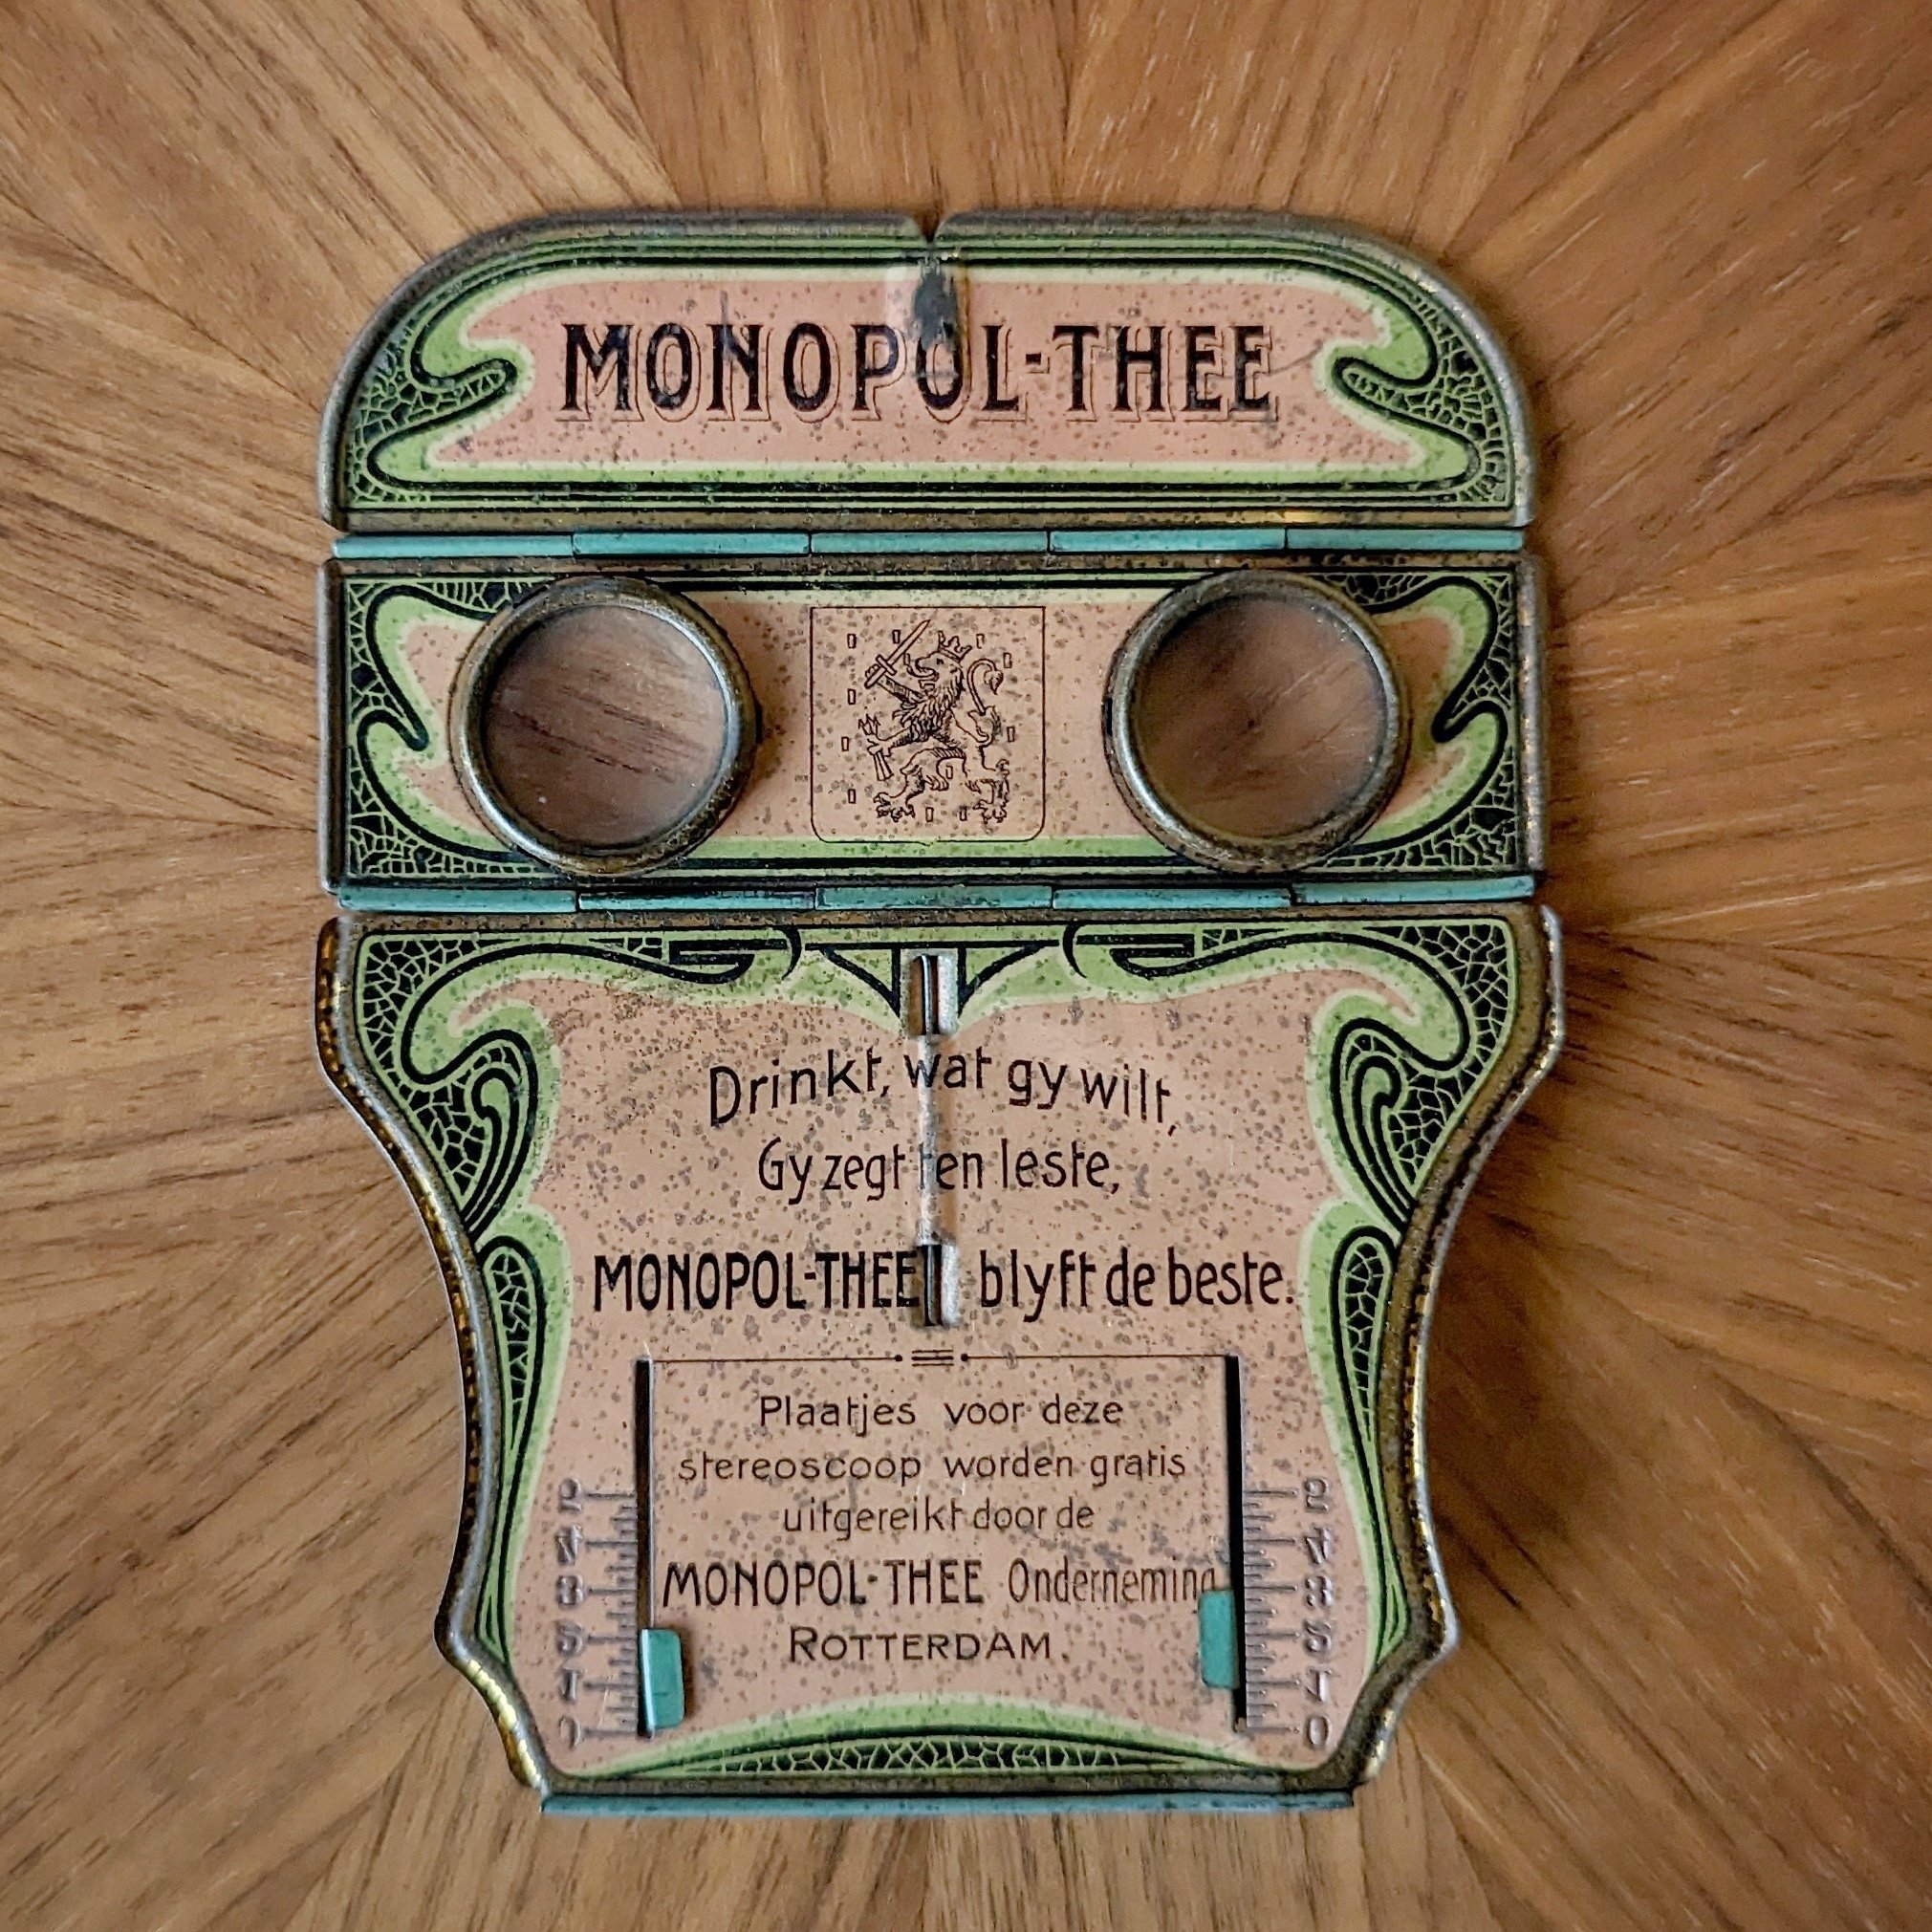 Monopol Thee